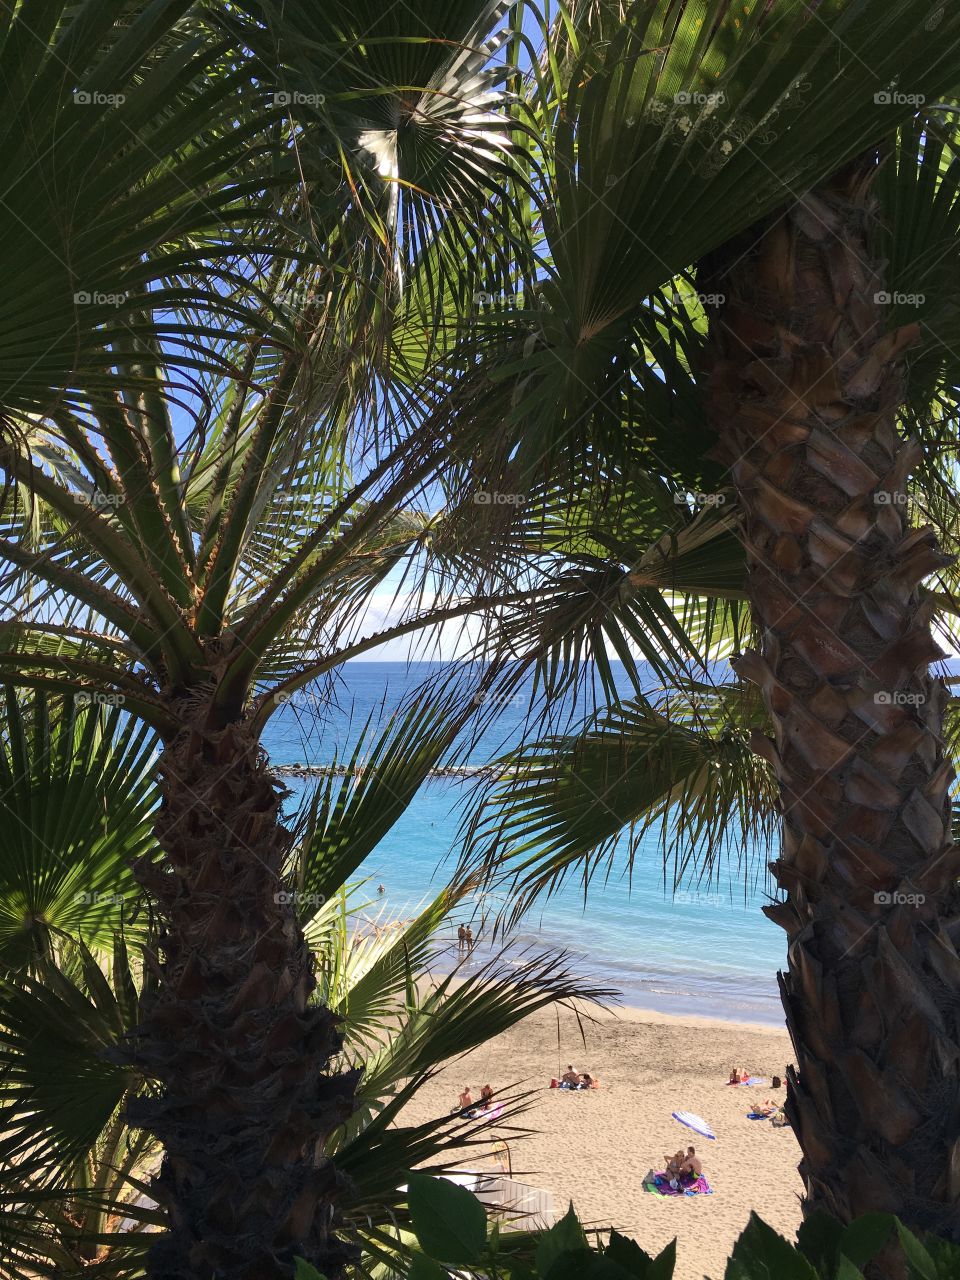 Peeking through palm trees at sparkling ocean water and a beautiful sandy beach.